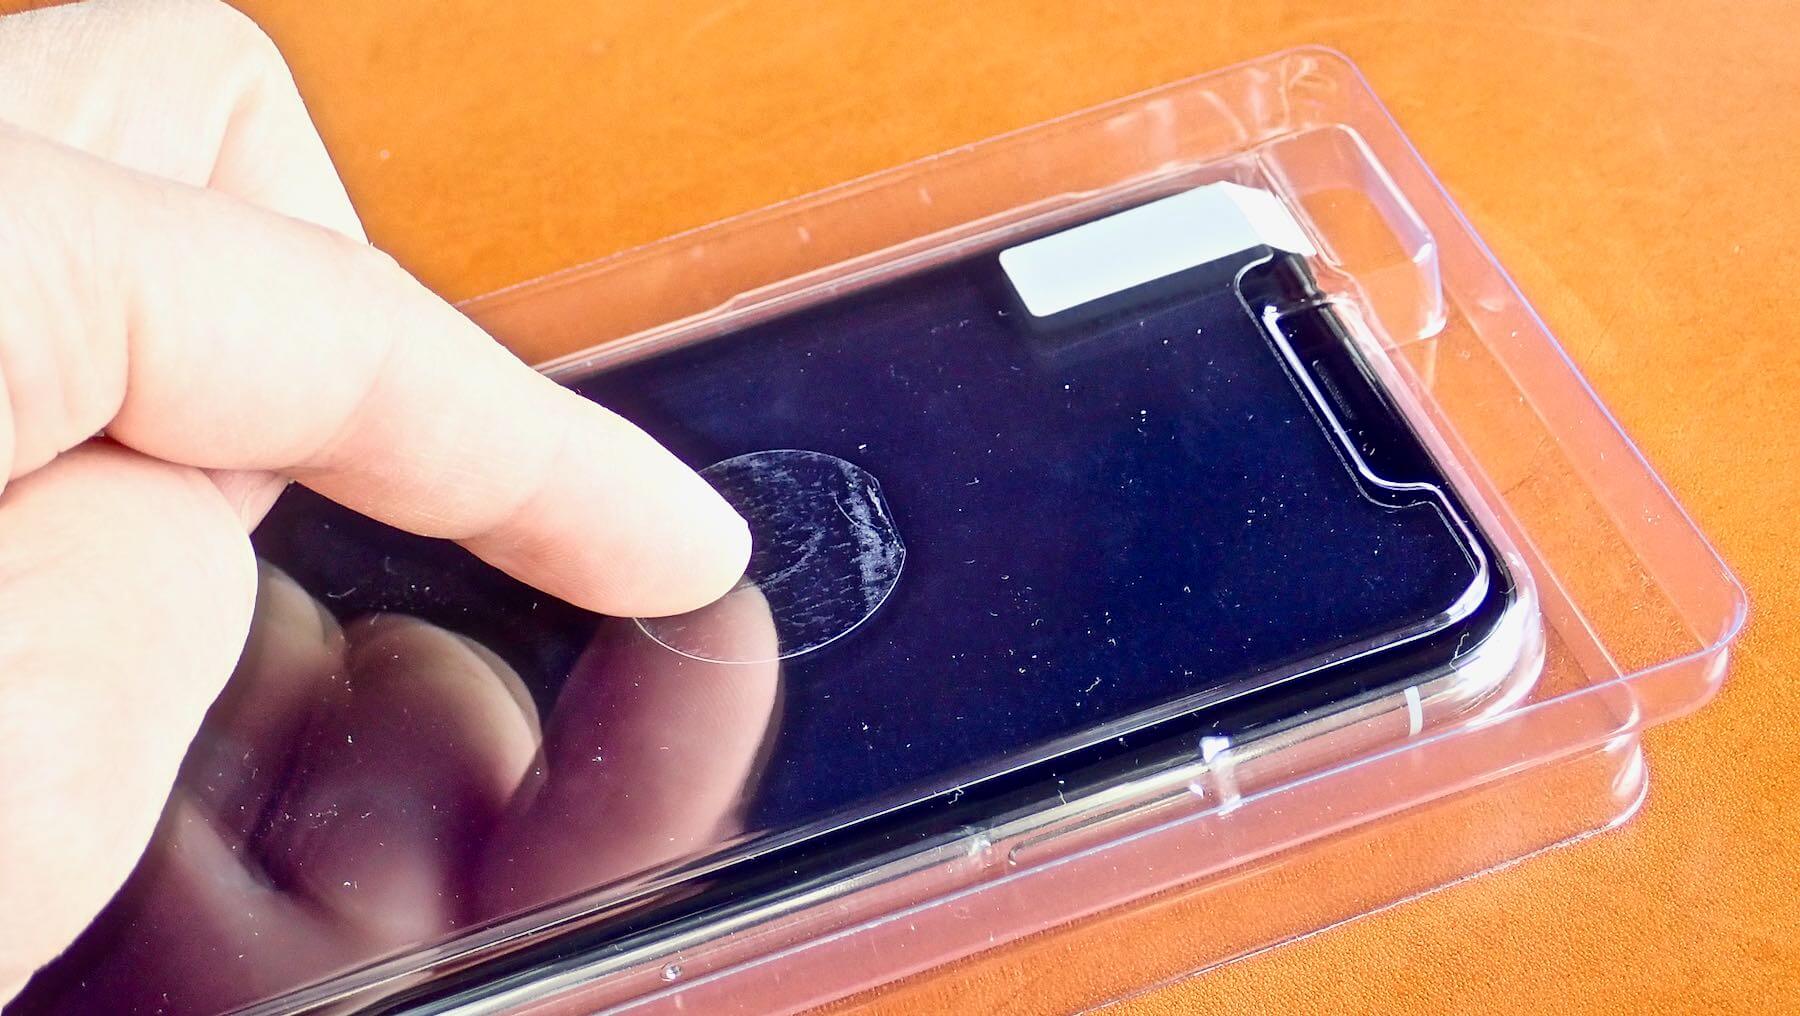 0190 iPhone X screen protect glass film precision 18